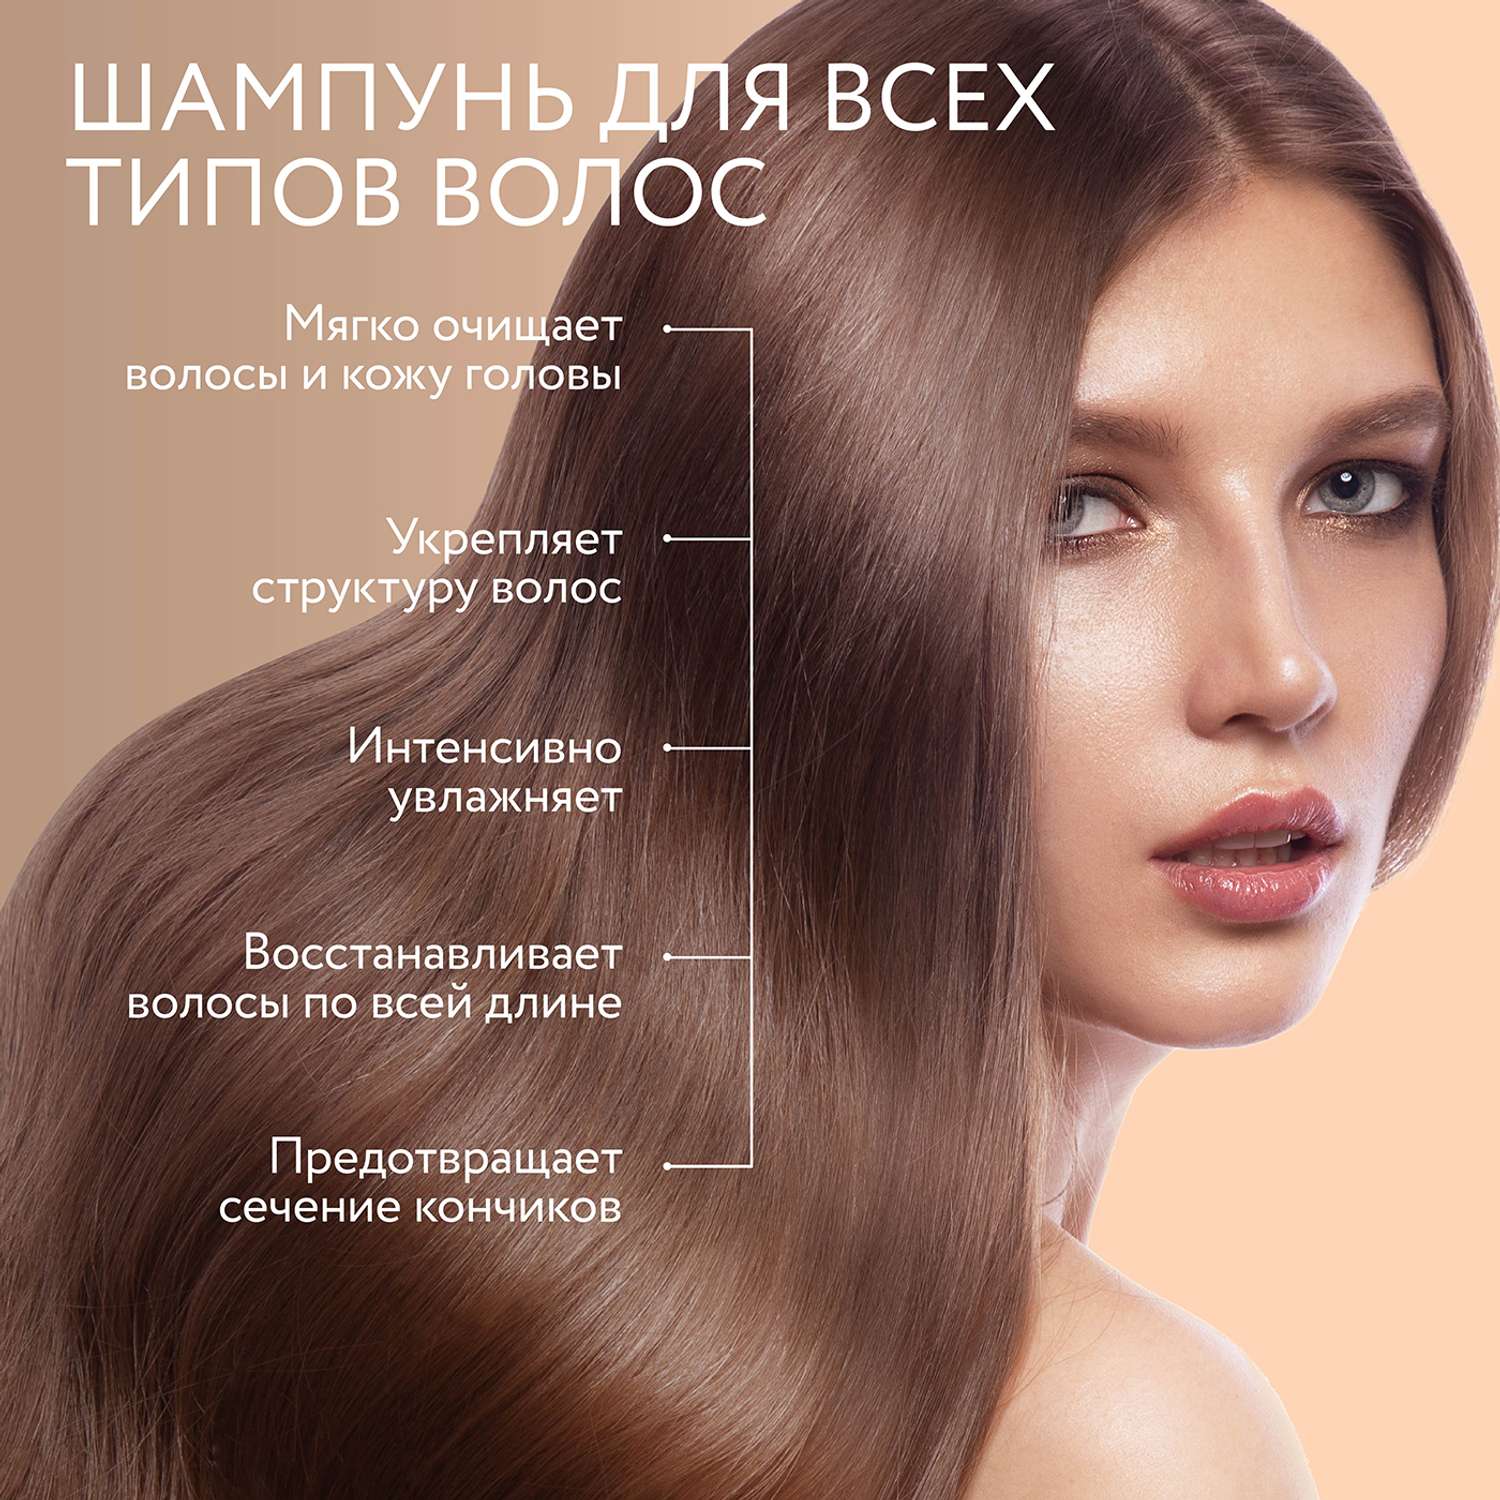 Шампунь Ollin salon beauty для ухода за волосами с экстрактом семян льна 1000 мл - фото 3